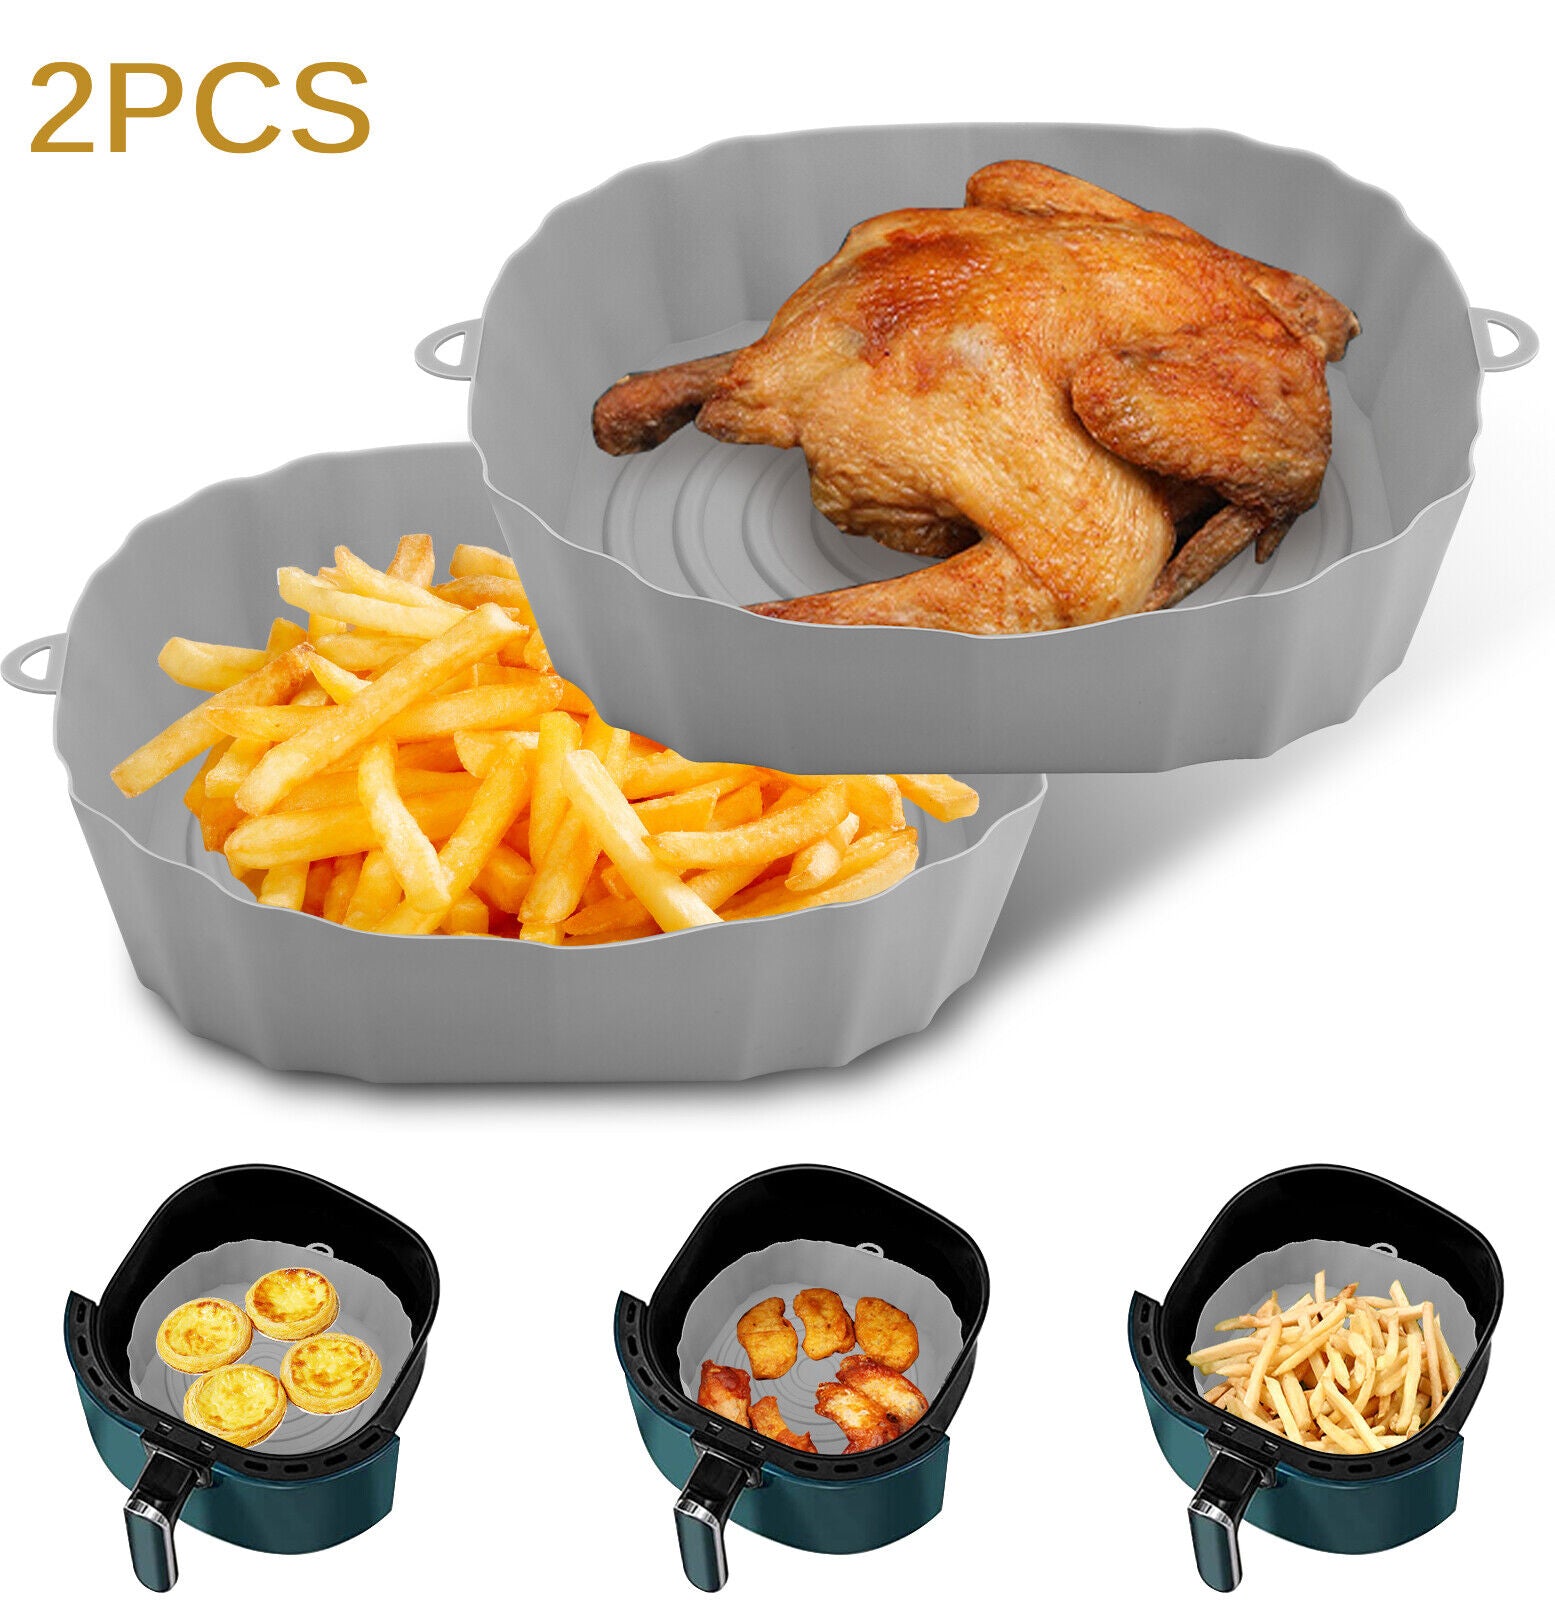 2 Pcs Air Fryer Silicone Pot Baskets Liners, Non-Stick & Oven Safe